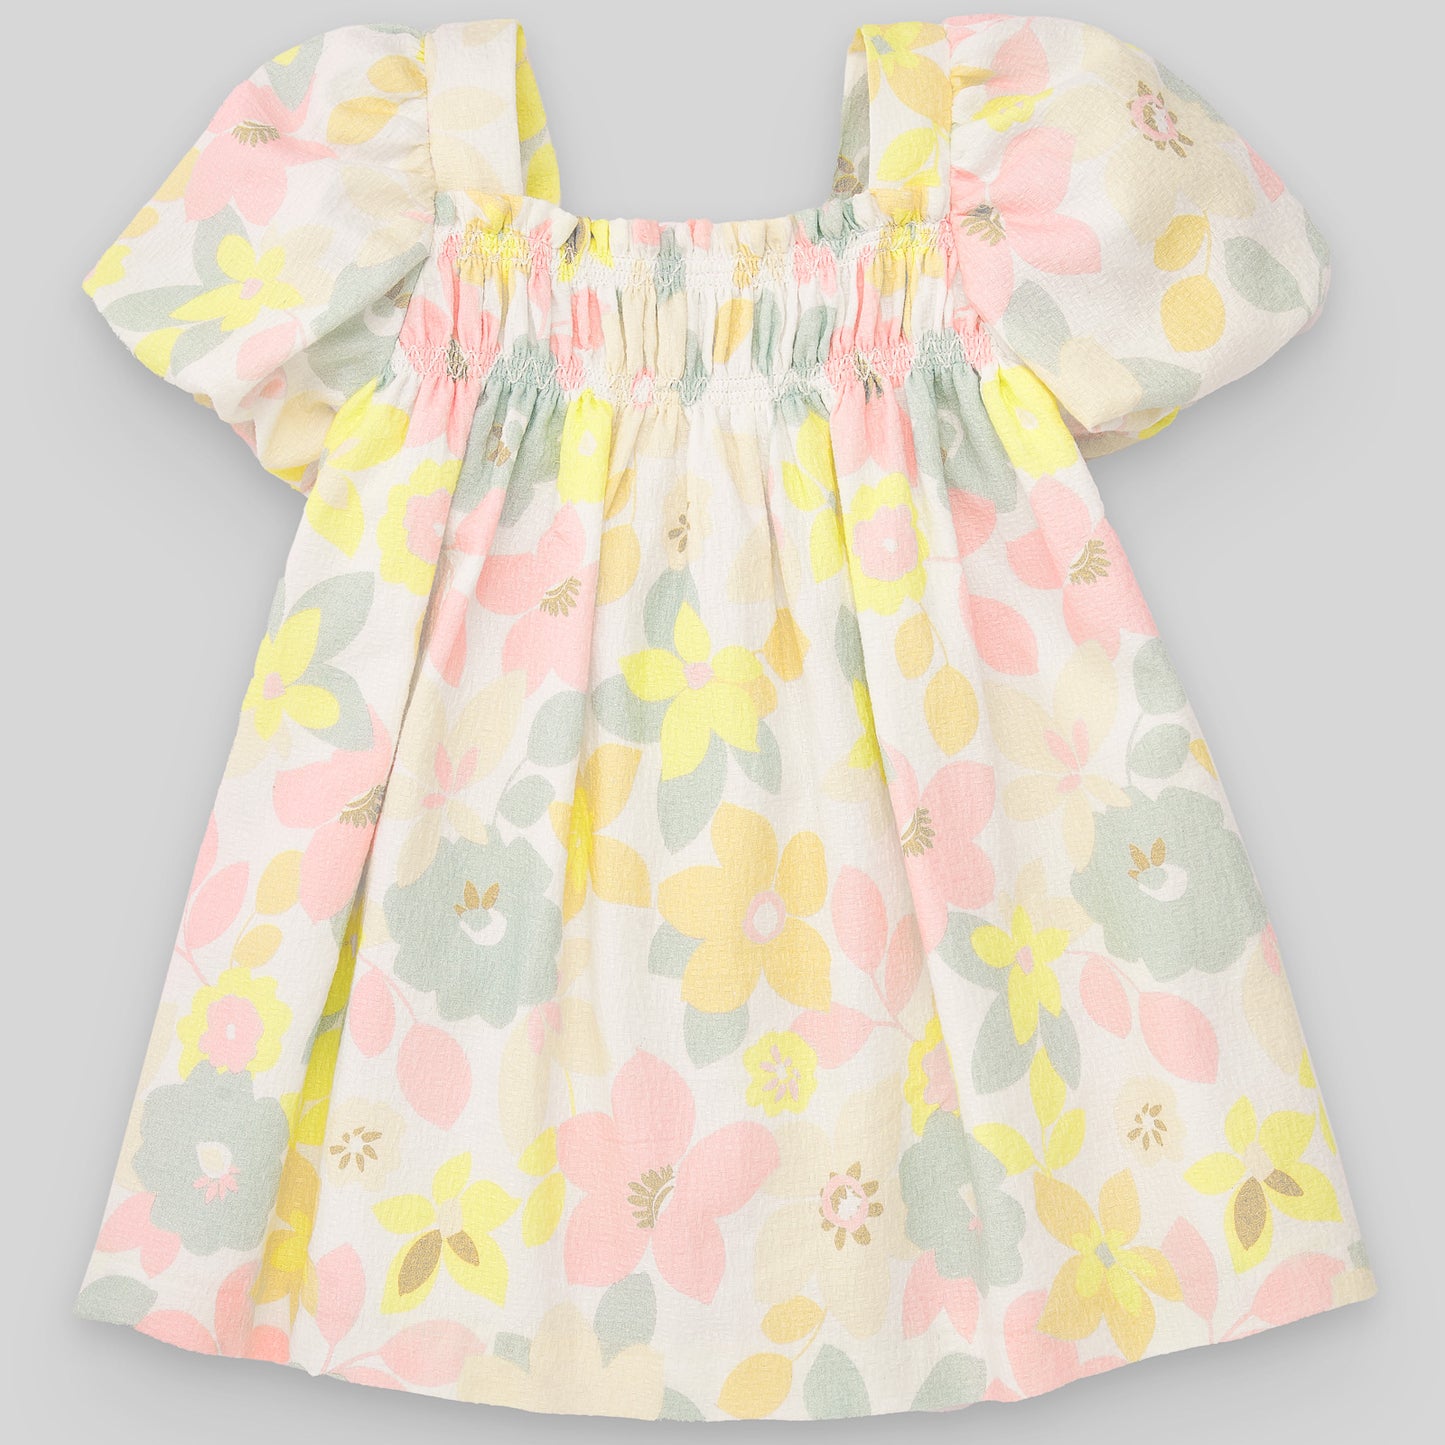 PAZ RODRIGUEZ Multicolored Flower Patterned Cotton Dress